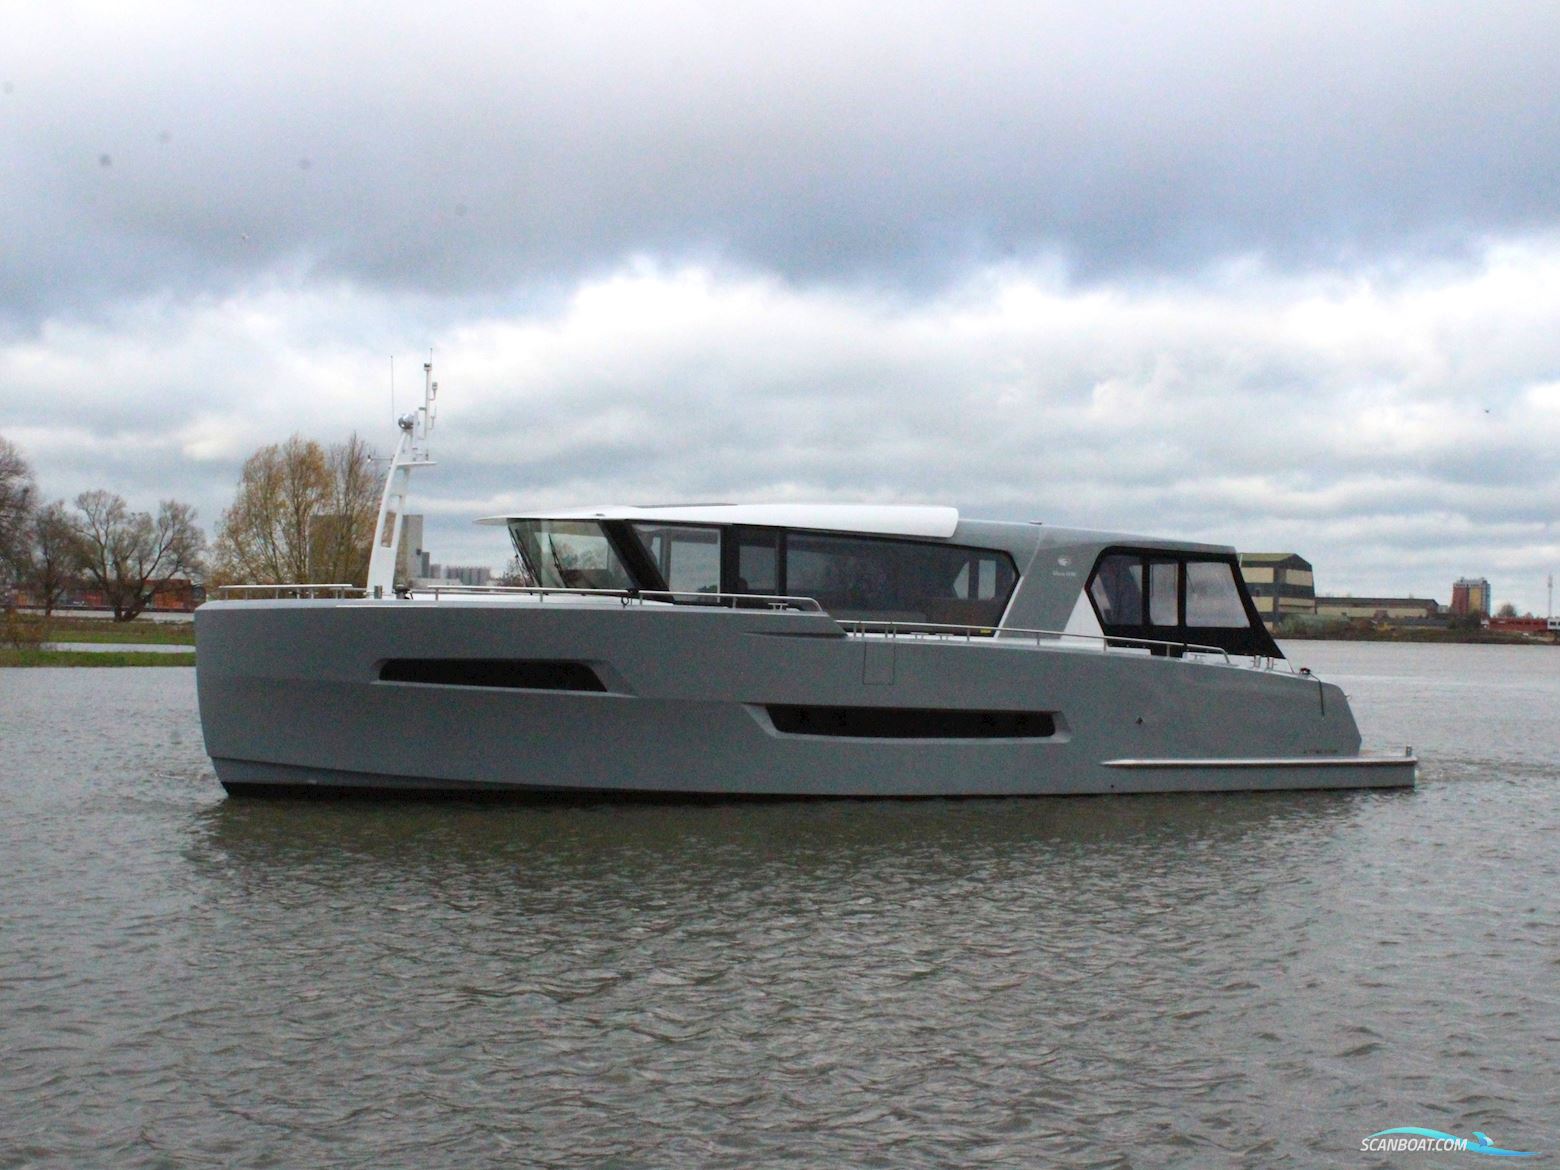 Altena 54 Next Generation Motor boat 2022, with John Deere engine, The Netherlands